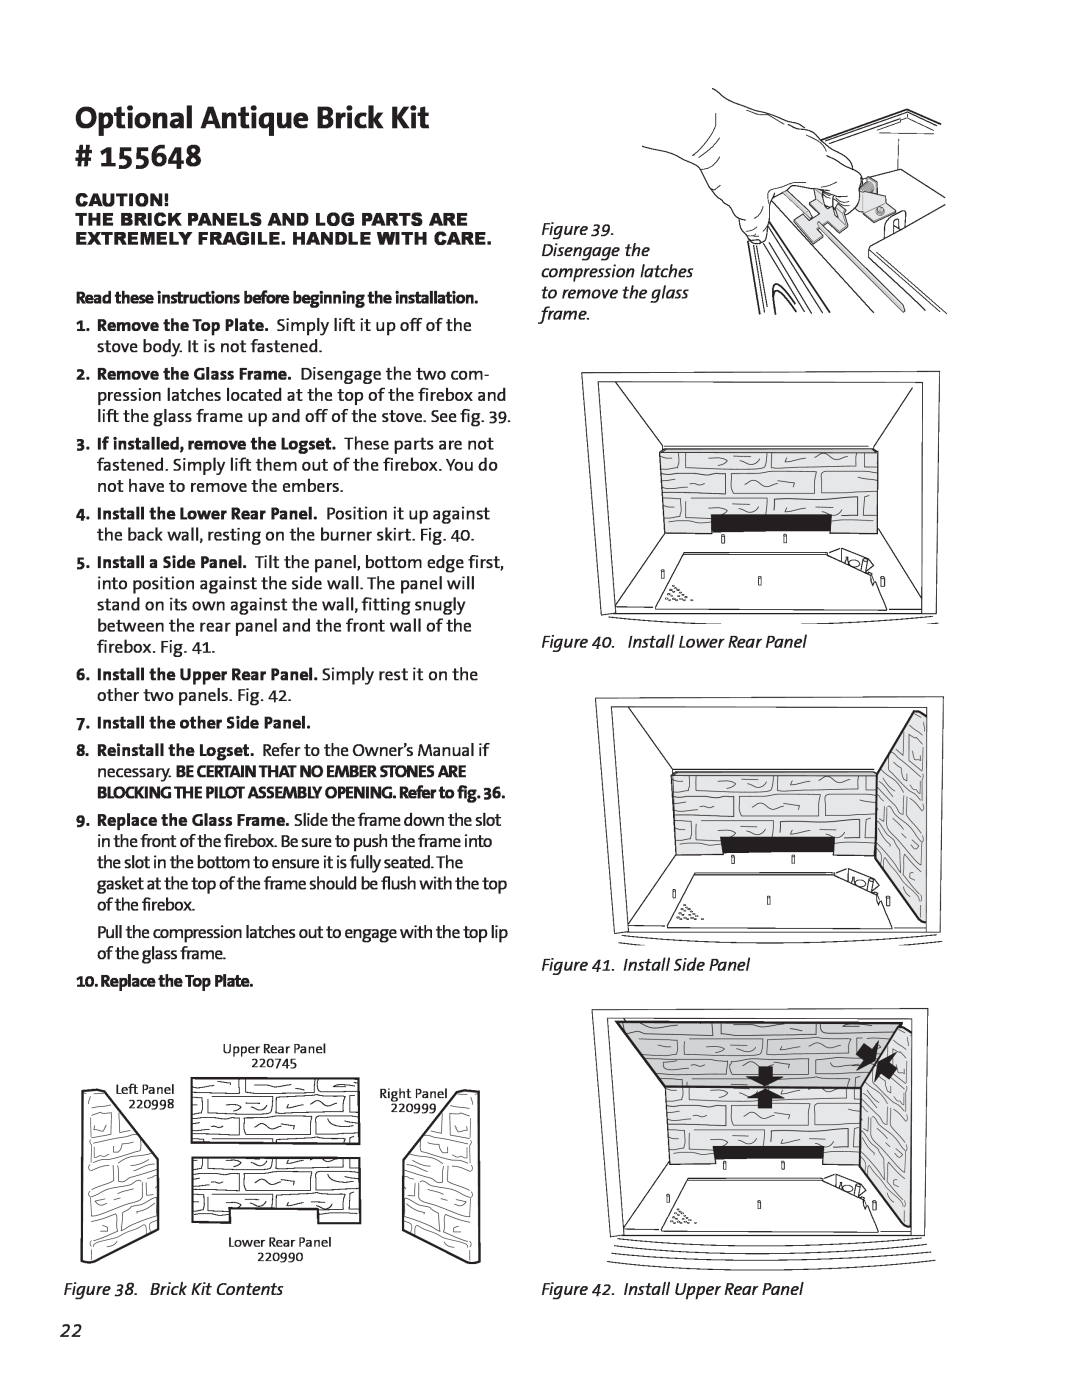 Jotul GF300 BV manual Optional Antique Brick Kit #, Brick Kit Contents, Install Lower Rear Panel, Install Side Panel 